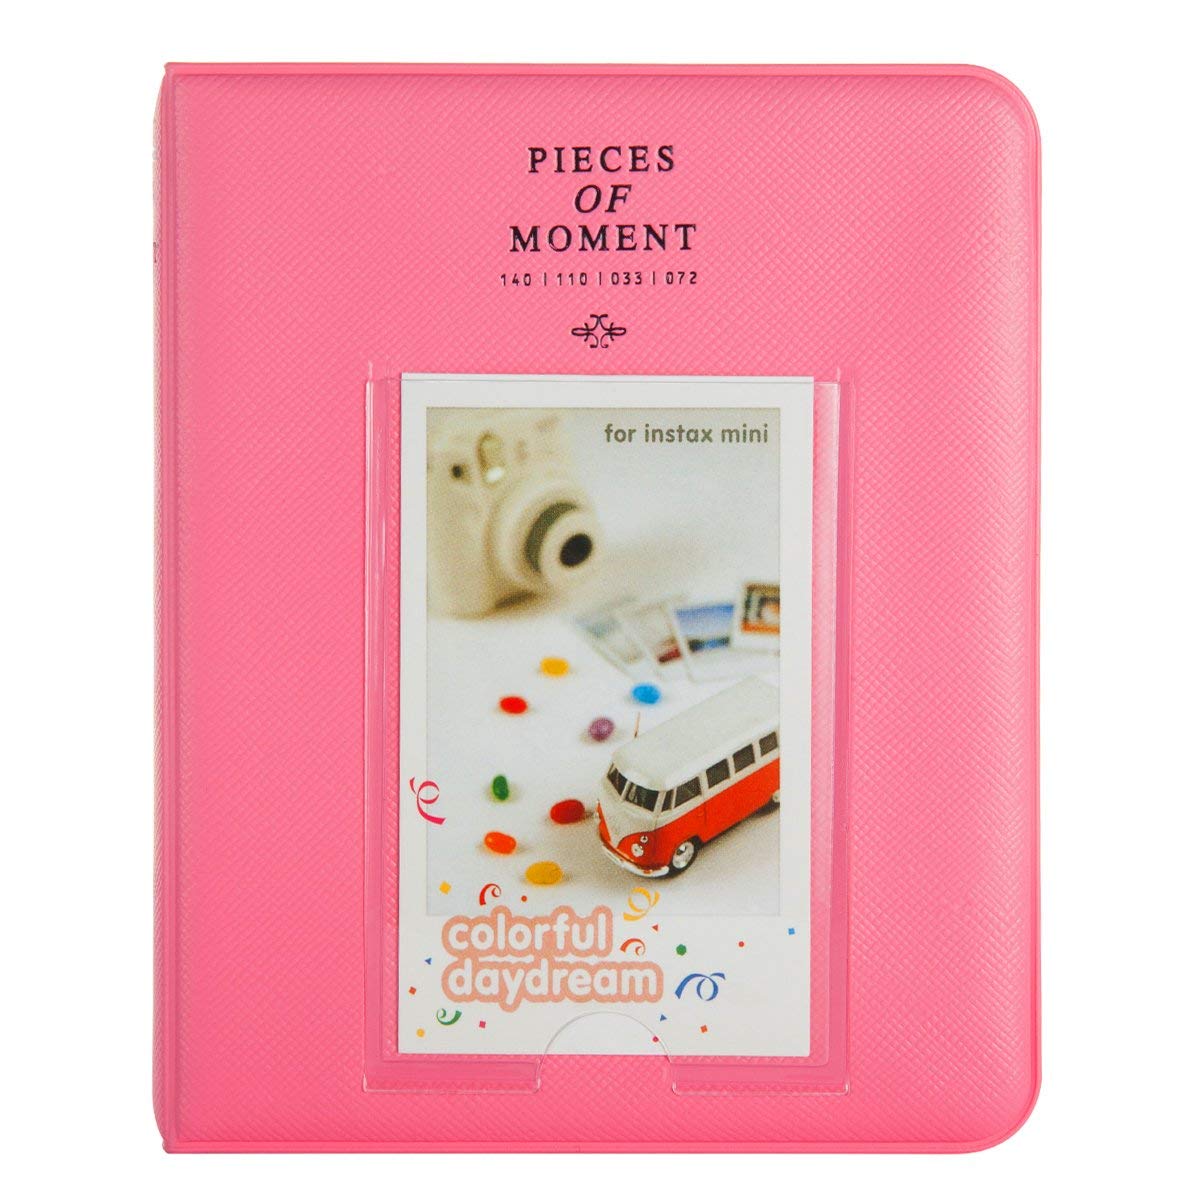 [Fuji Instax Mini 9 Photo Album] CAIUL Pieces Of Moment Book Album for Films of Instax Mini 7s 8 8+ 9 25 26 50s 70 90 (64 Photos) Flamingo Pink